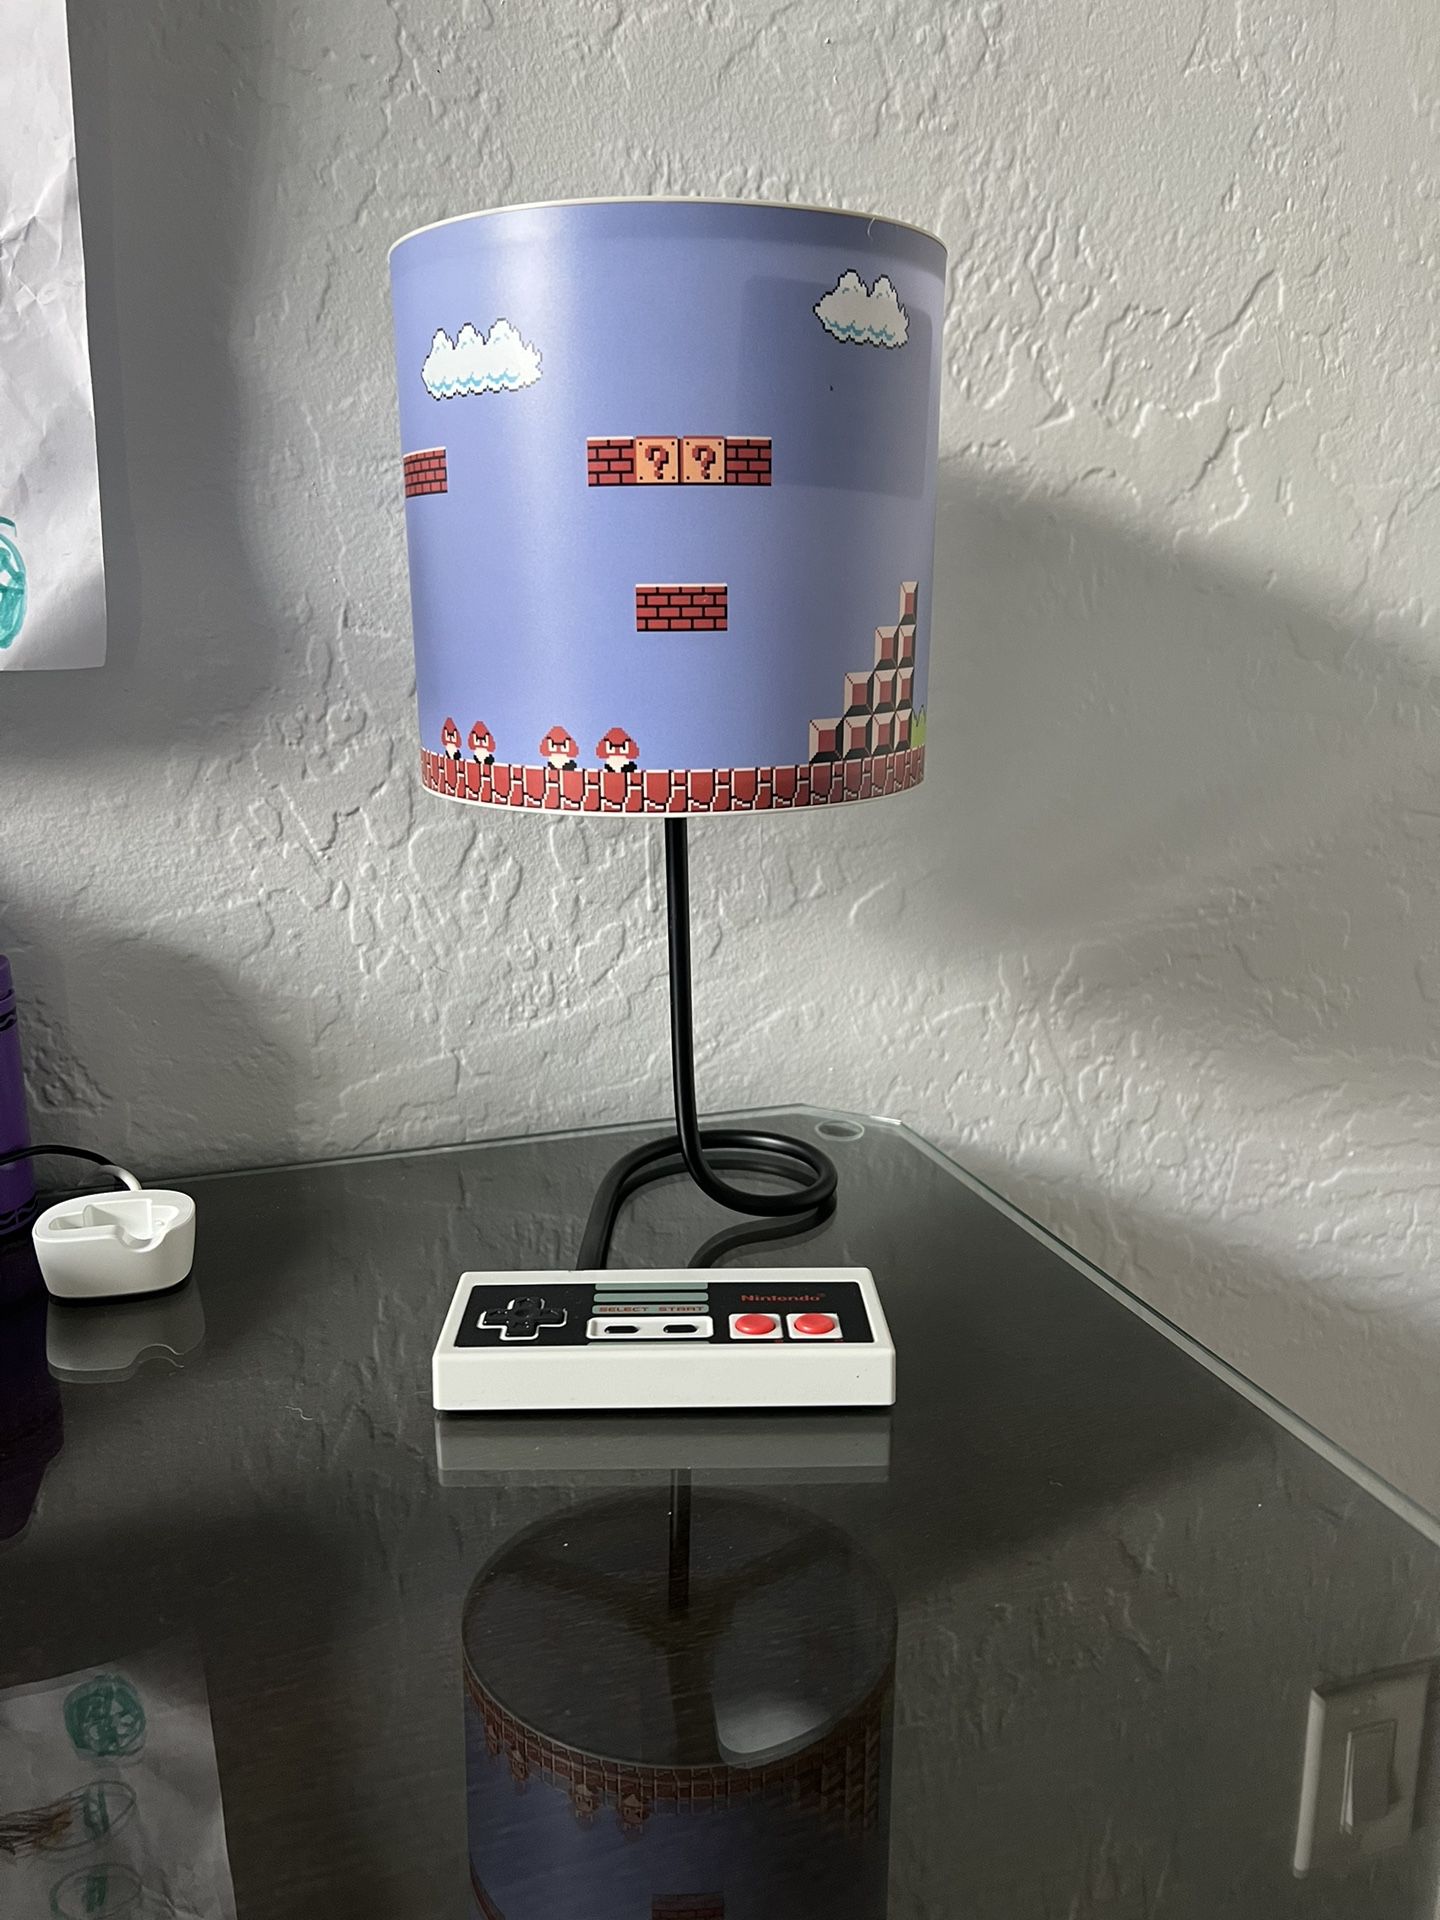 Nintendo Super Mario Bros Lamp